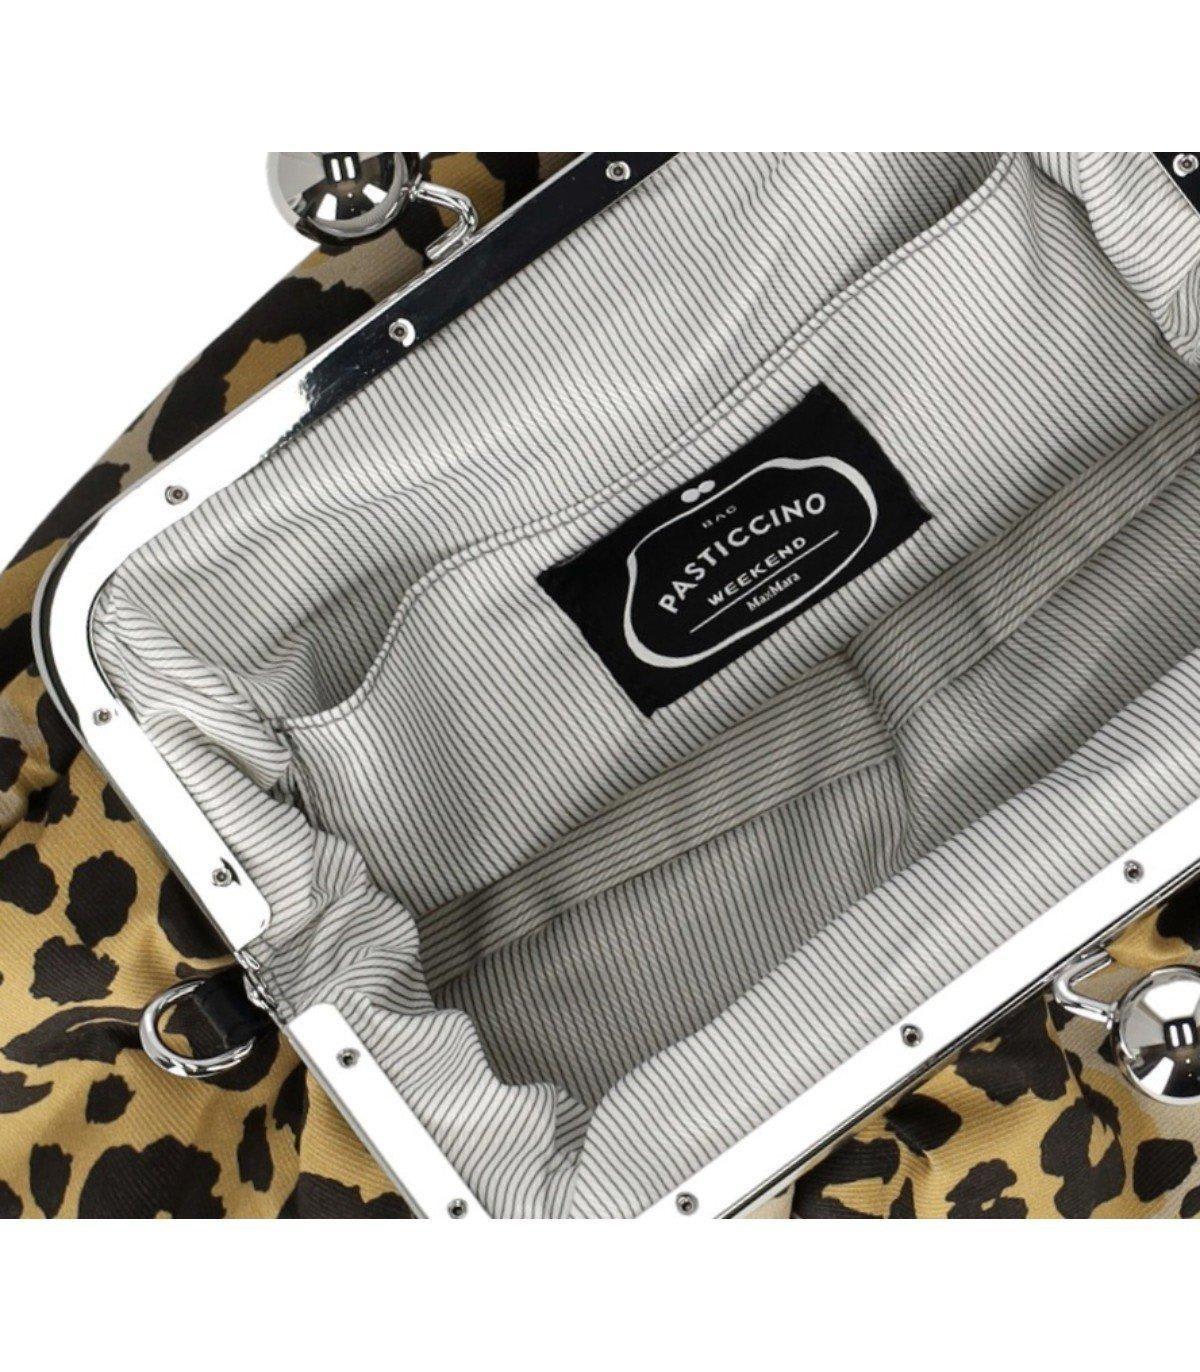 Shop Weekend Max Mara Leopard Printed Medium Clutch Bag